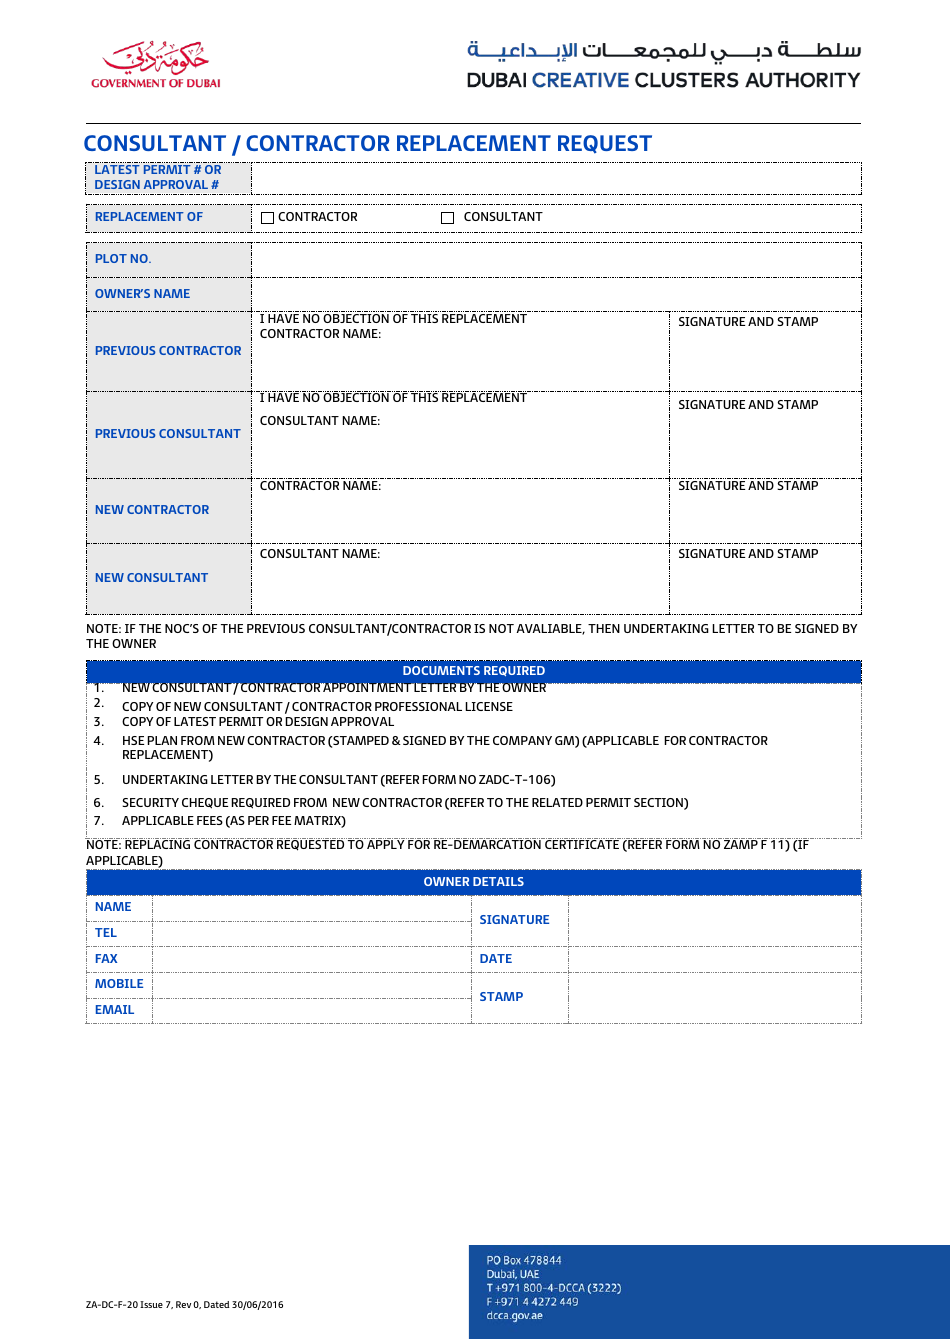 Consultant / Contractor Replacement Request - Dubai, United Arab Emirates, Page 1